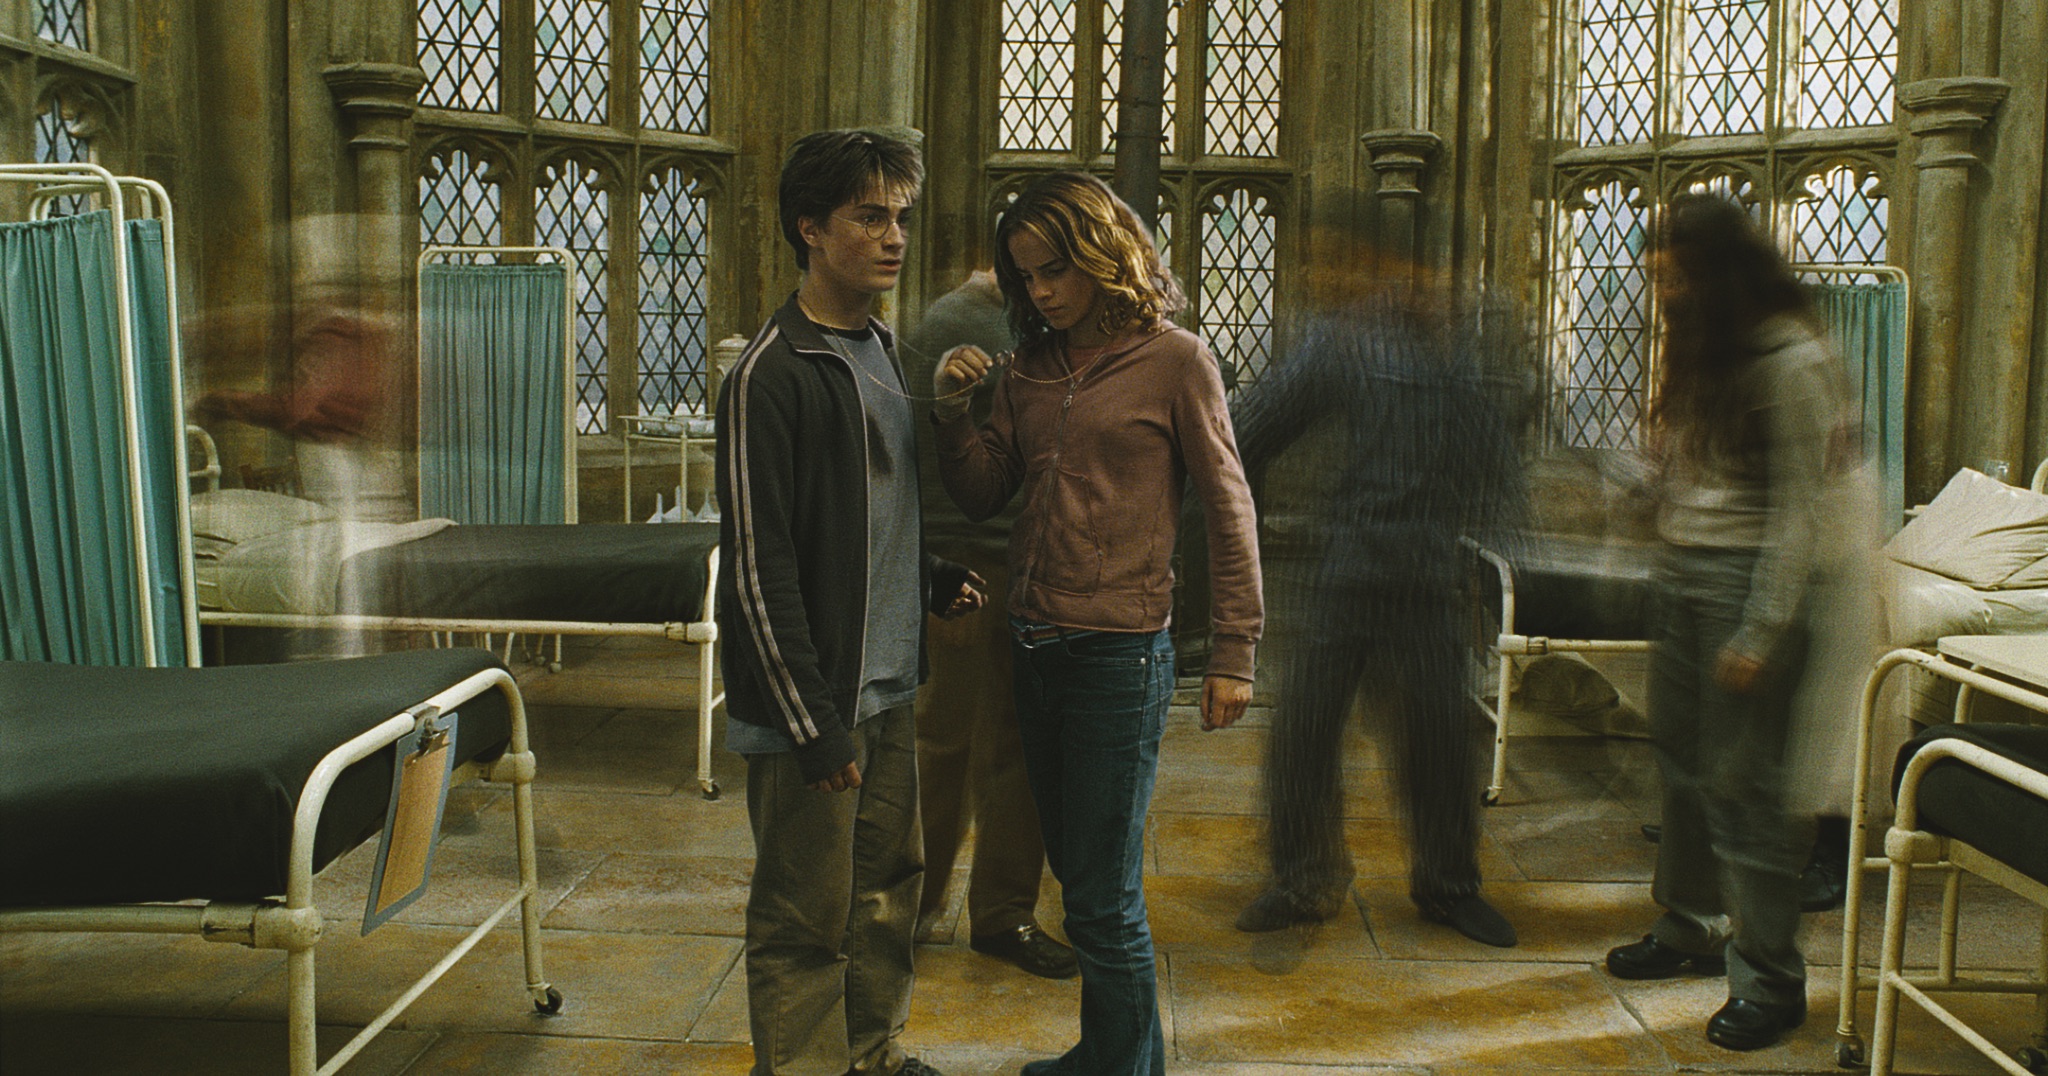 How Harry Potter And The Prisoner Of Azkaban's Time Travel Works